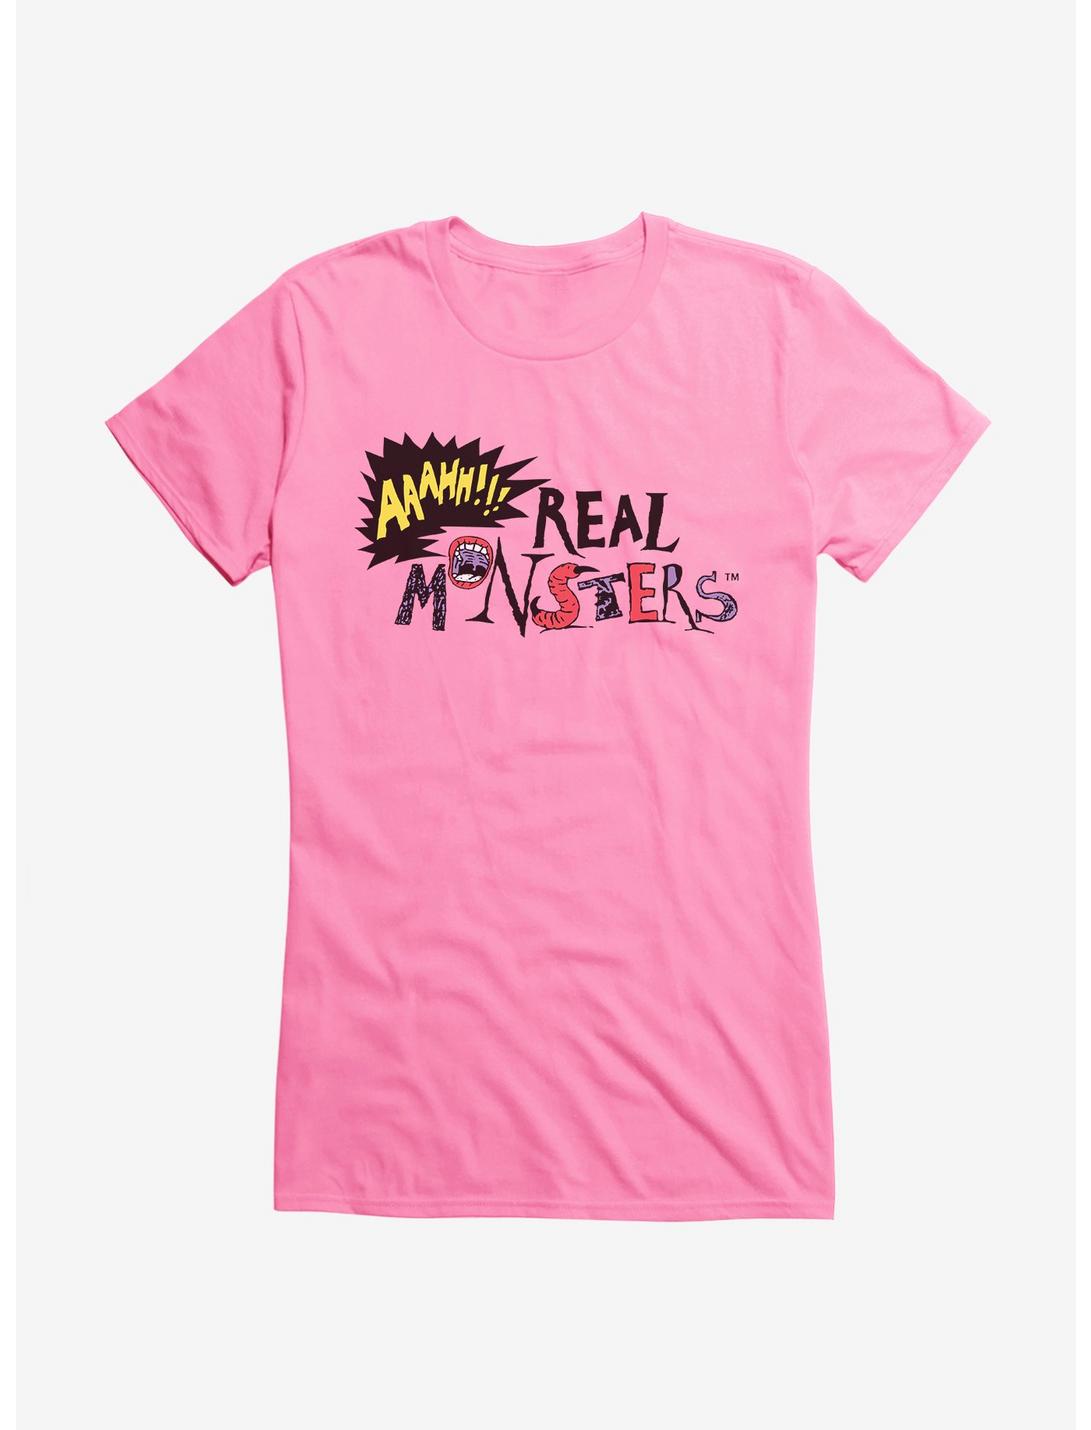 Aaahh!!! Real Monsters Logo Girls T-Shirt, , hi-res